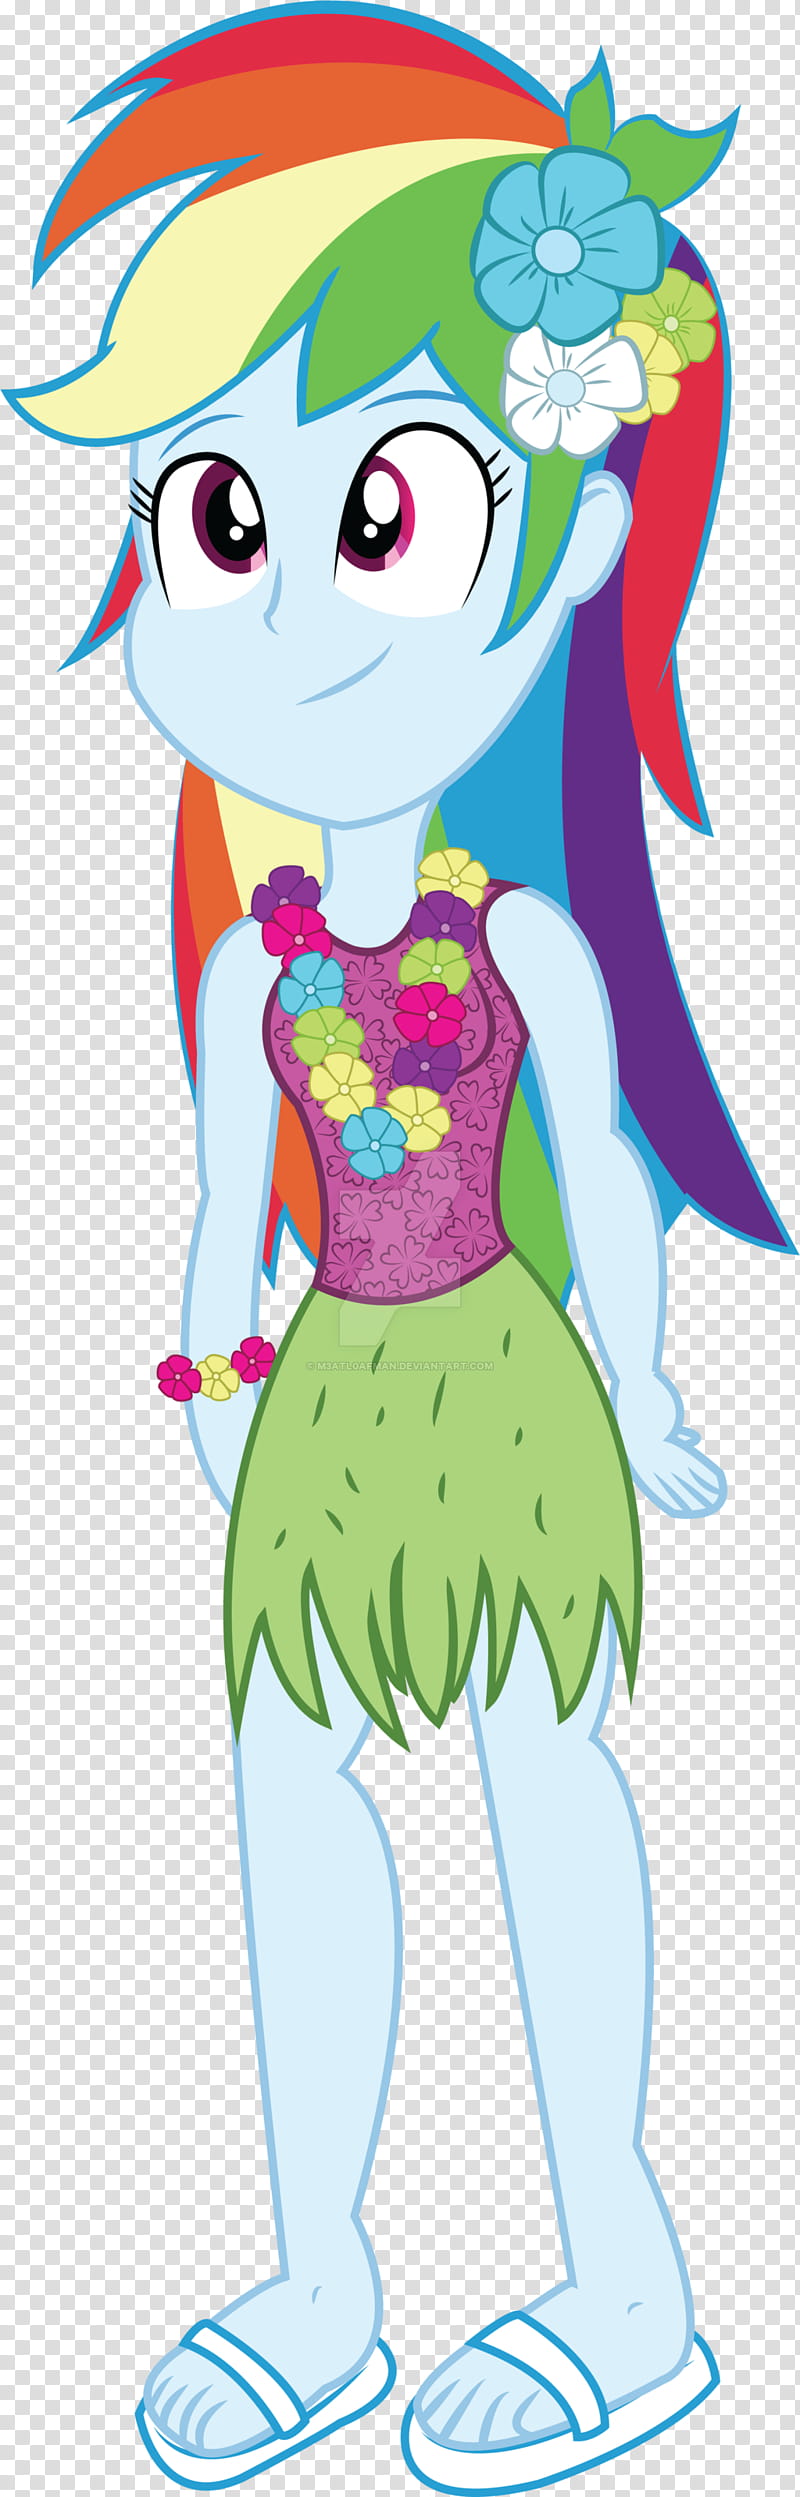 Rainbow Illustration, Jungle Island, Drawing, Luau, Hula, Grass Skirt, Artist, Cartoon transparent background PNG clipart